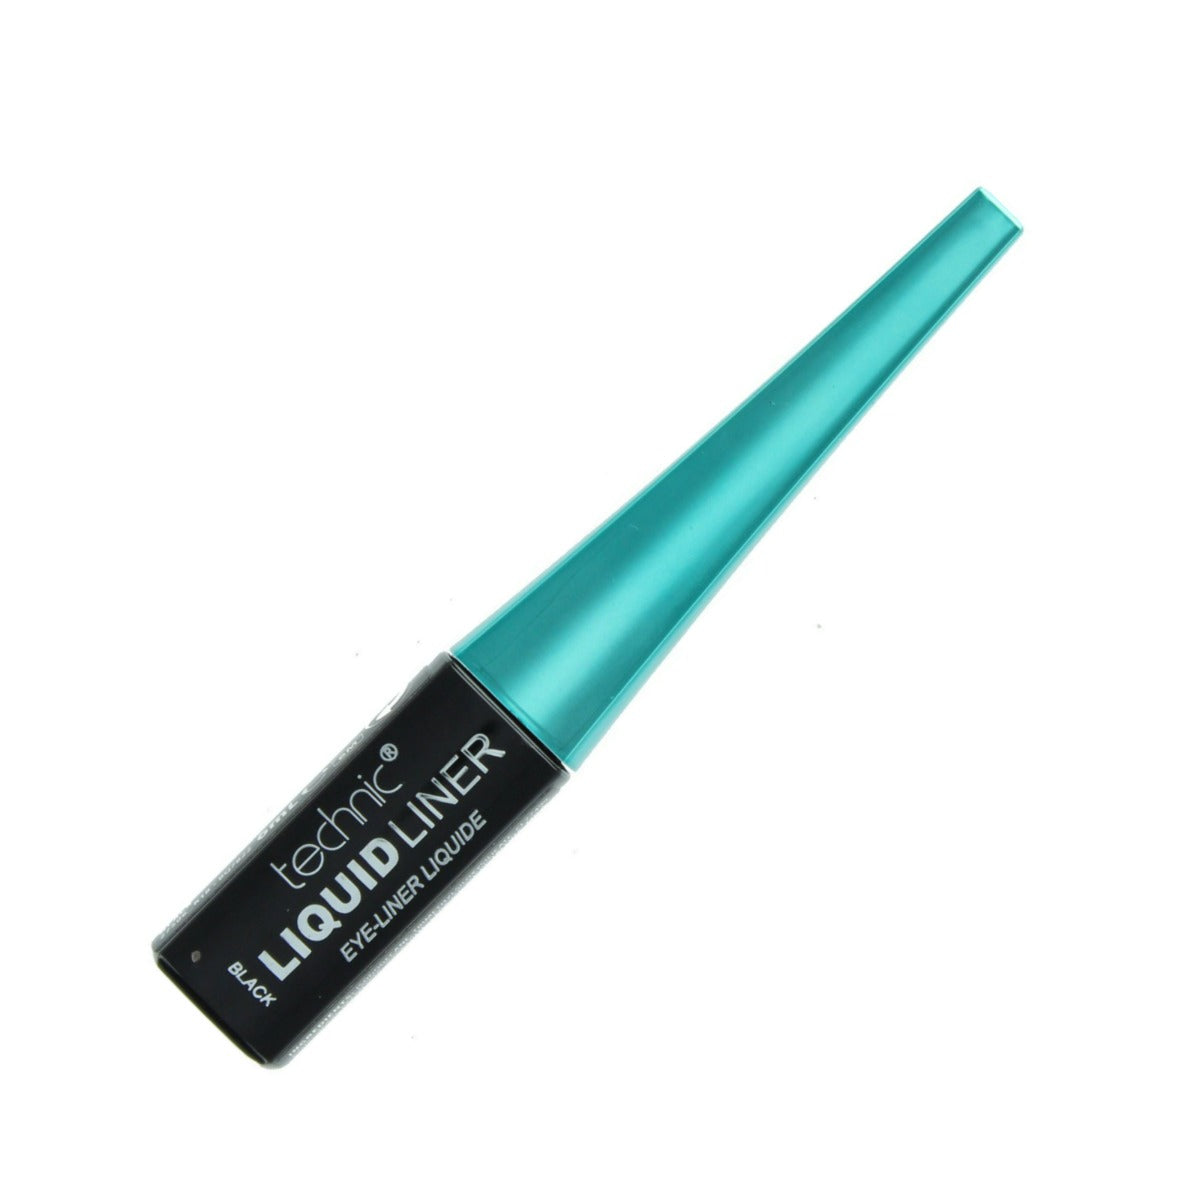 Technic Waterproof Liquid Eyeliner - Black (6m)